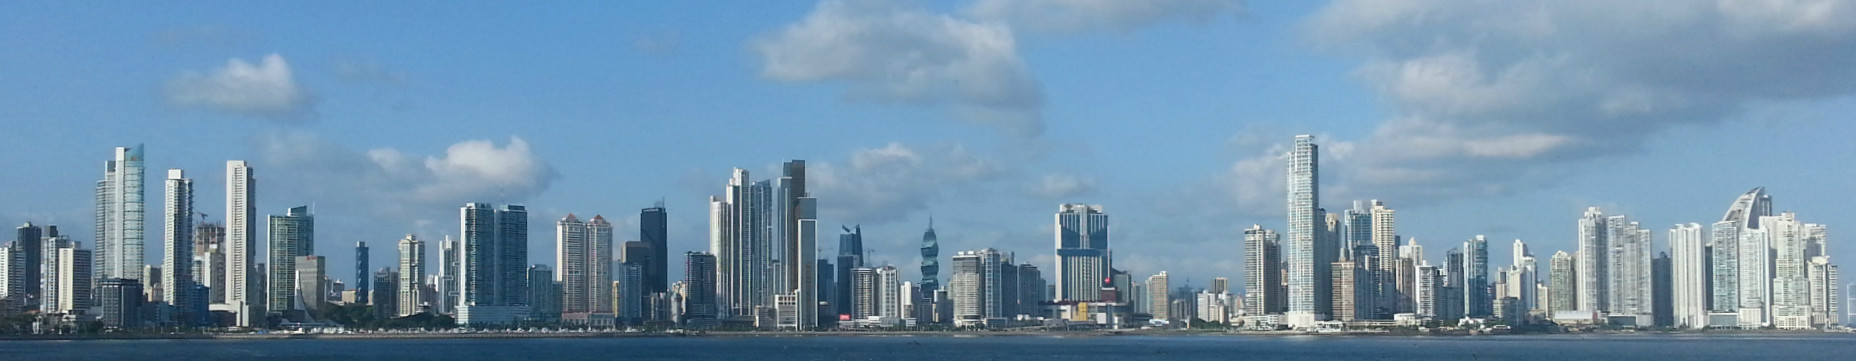 Panama City Skyline 2015